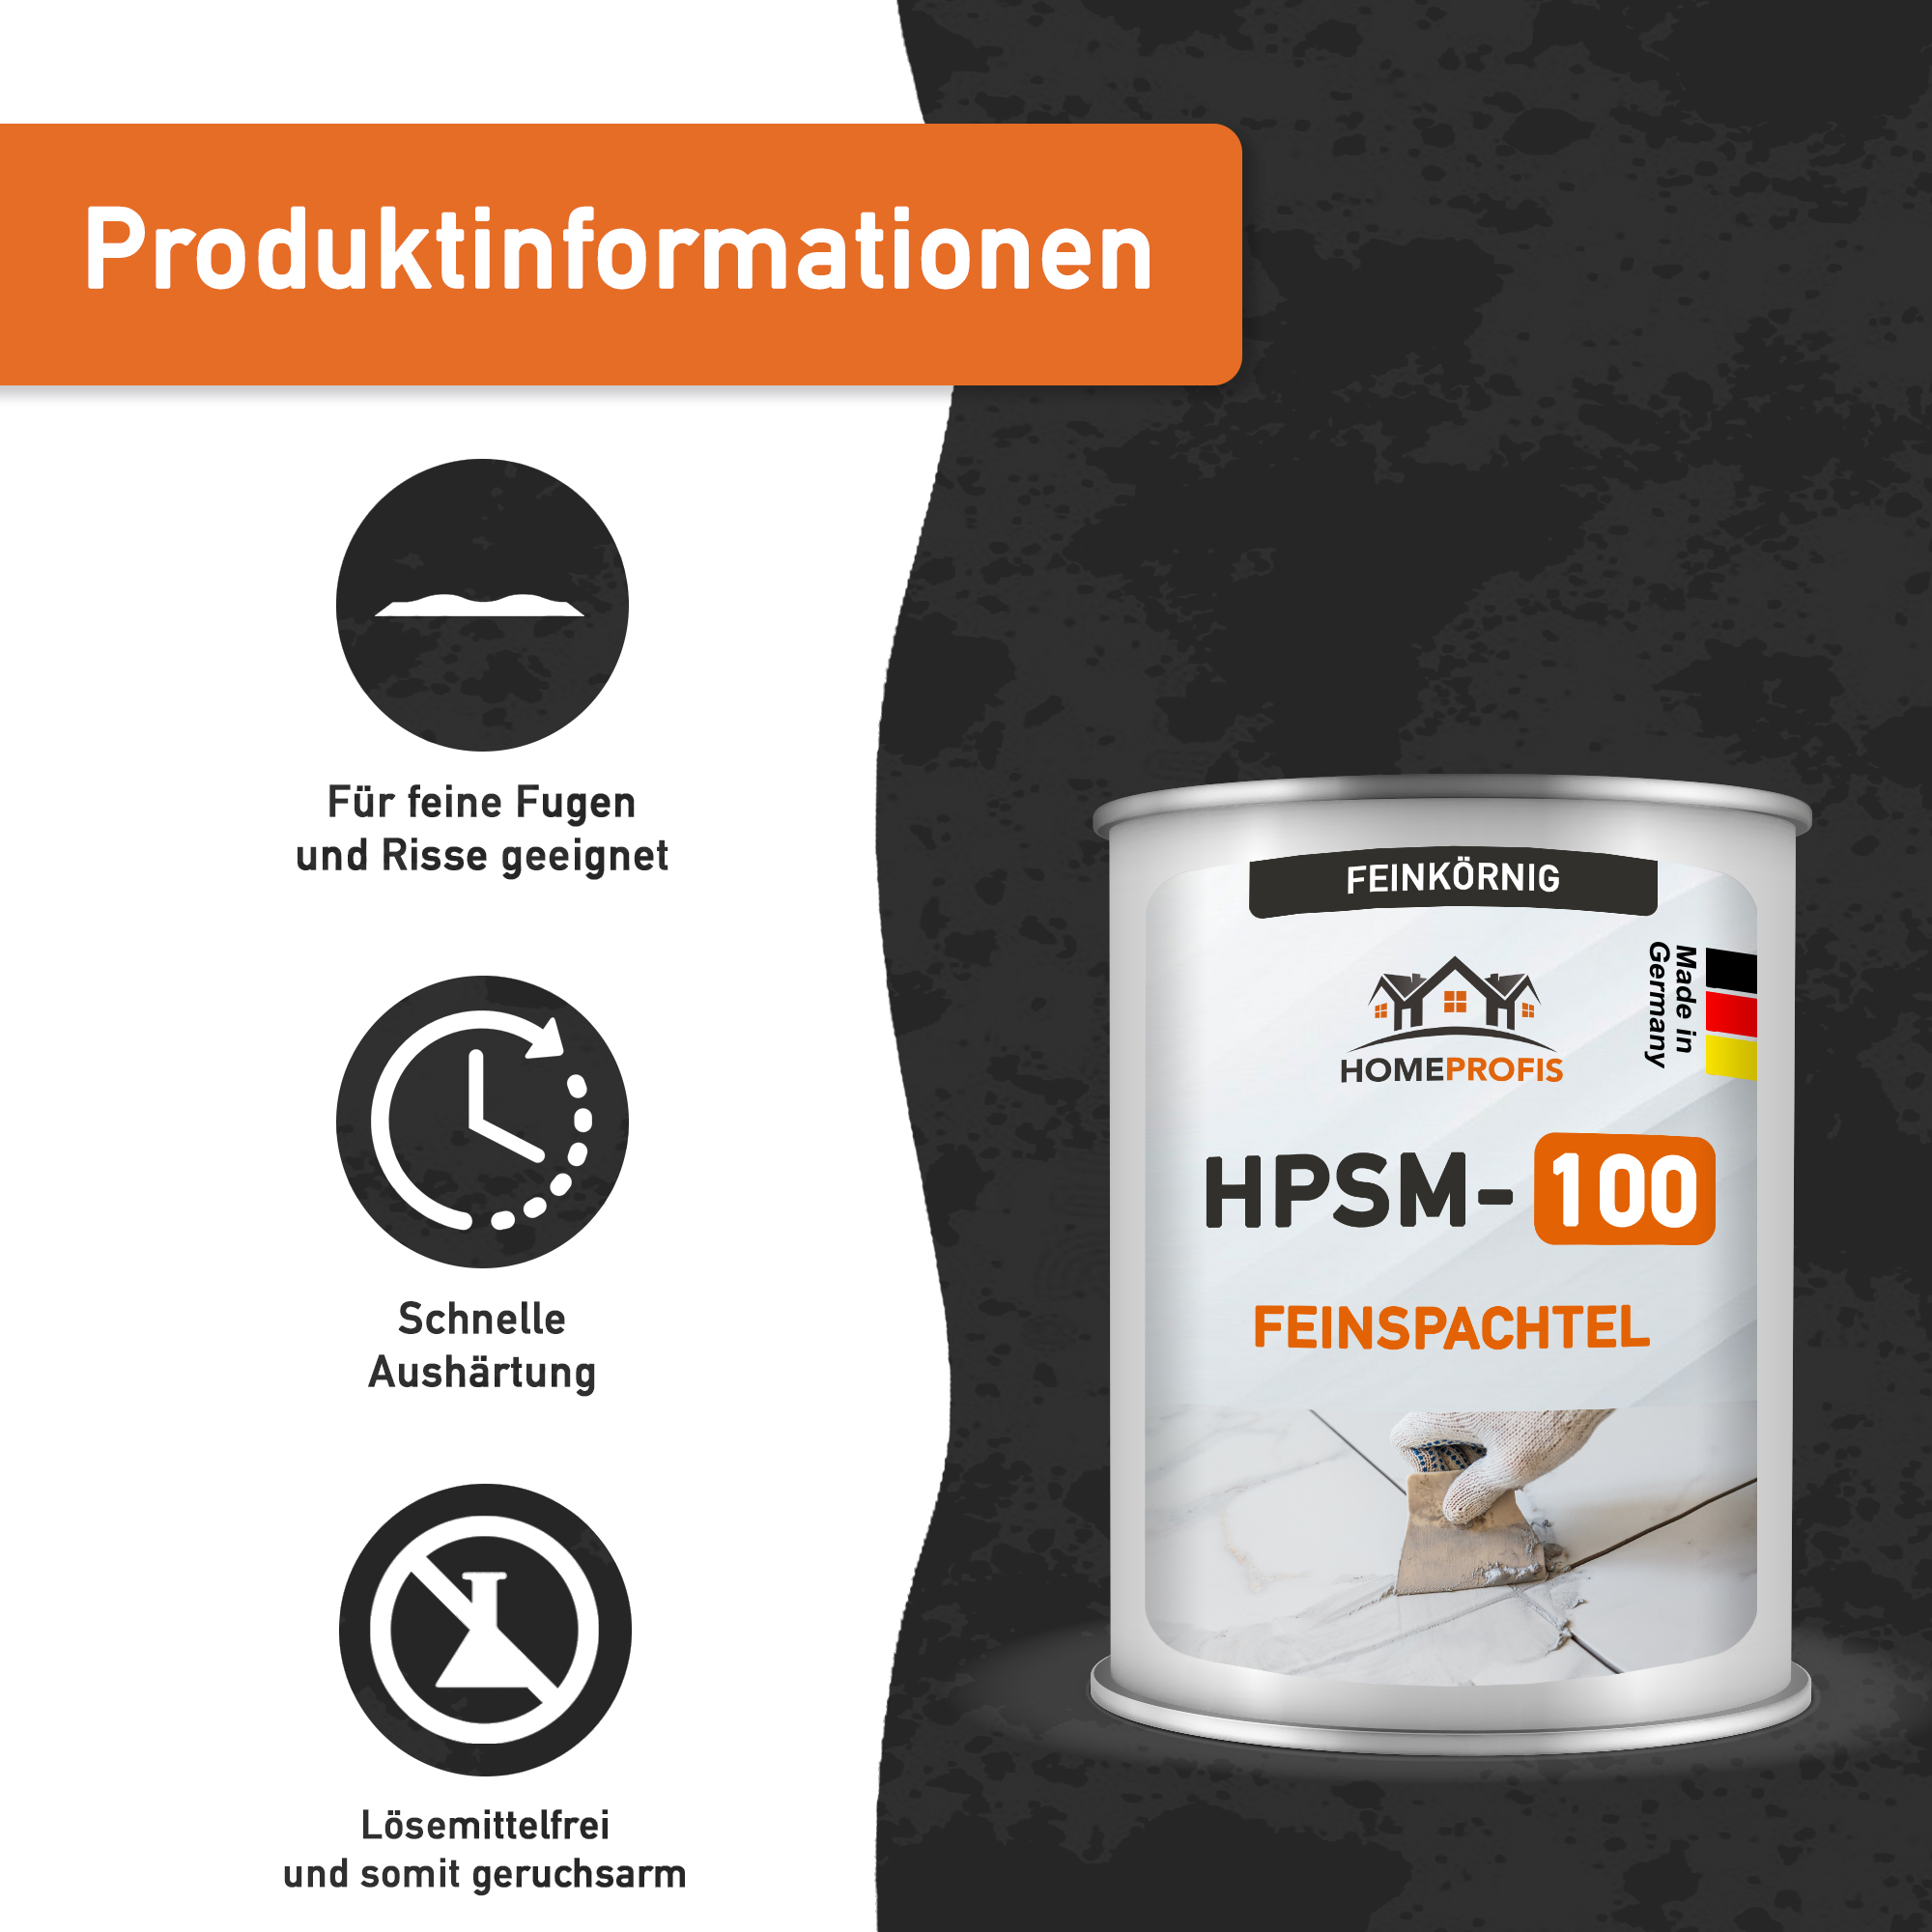 HPSM-100 Feinspachtel auf Epoxidharz Basis